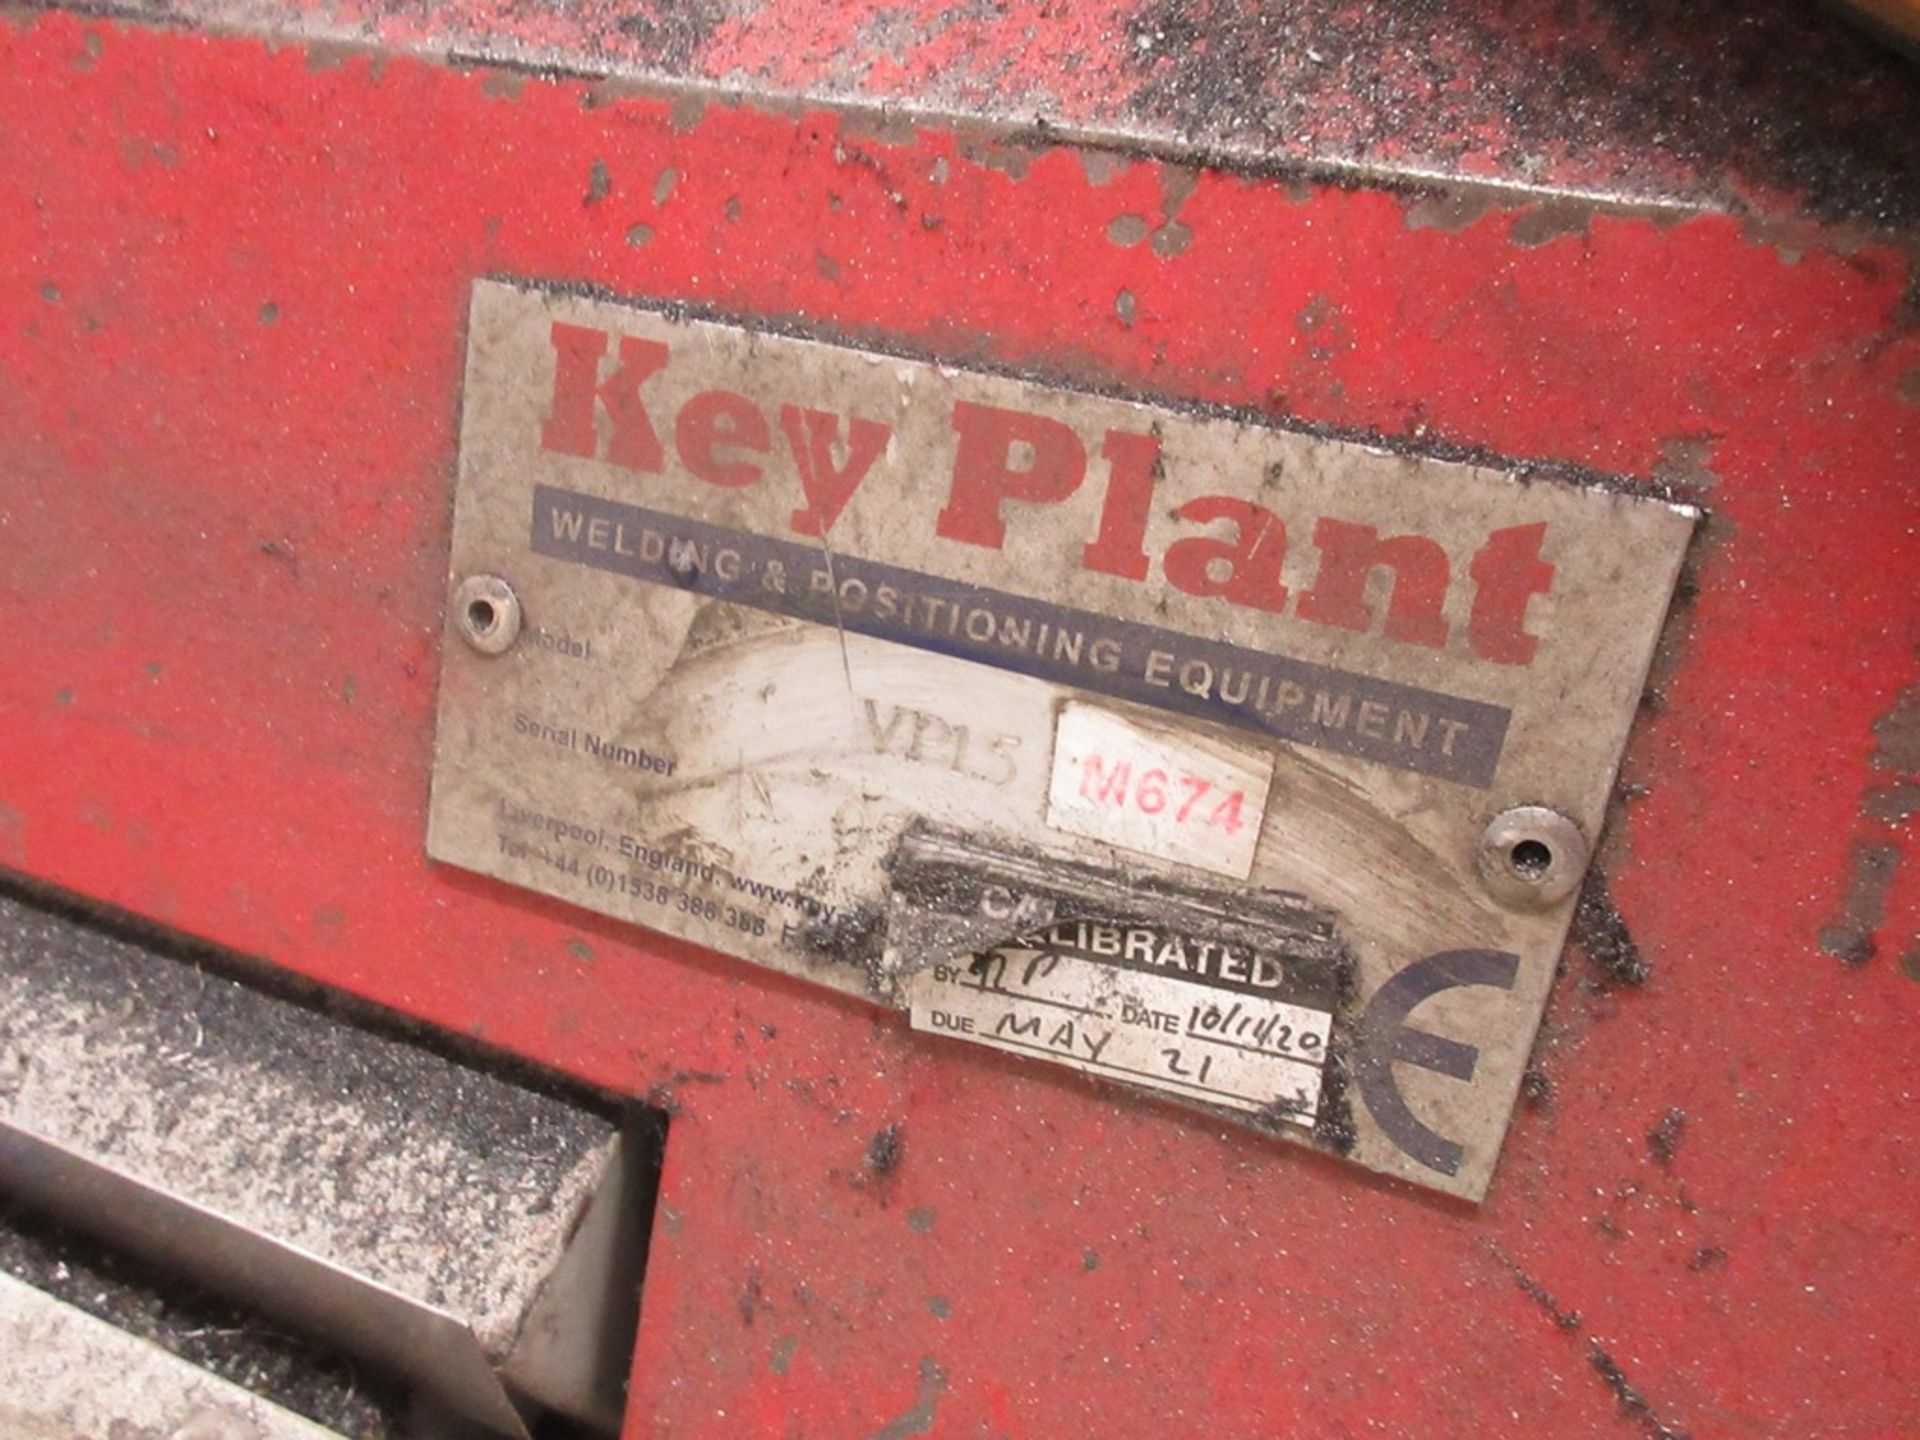 Key Plant VP15 1.5 tonne welding positioner, plate diameter 1150mm - Image 3 of 6